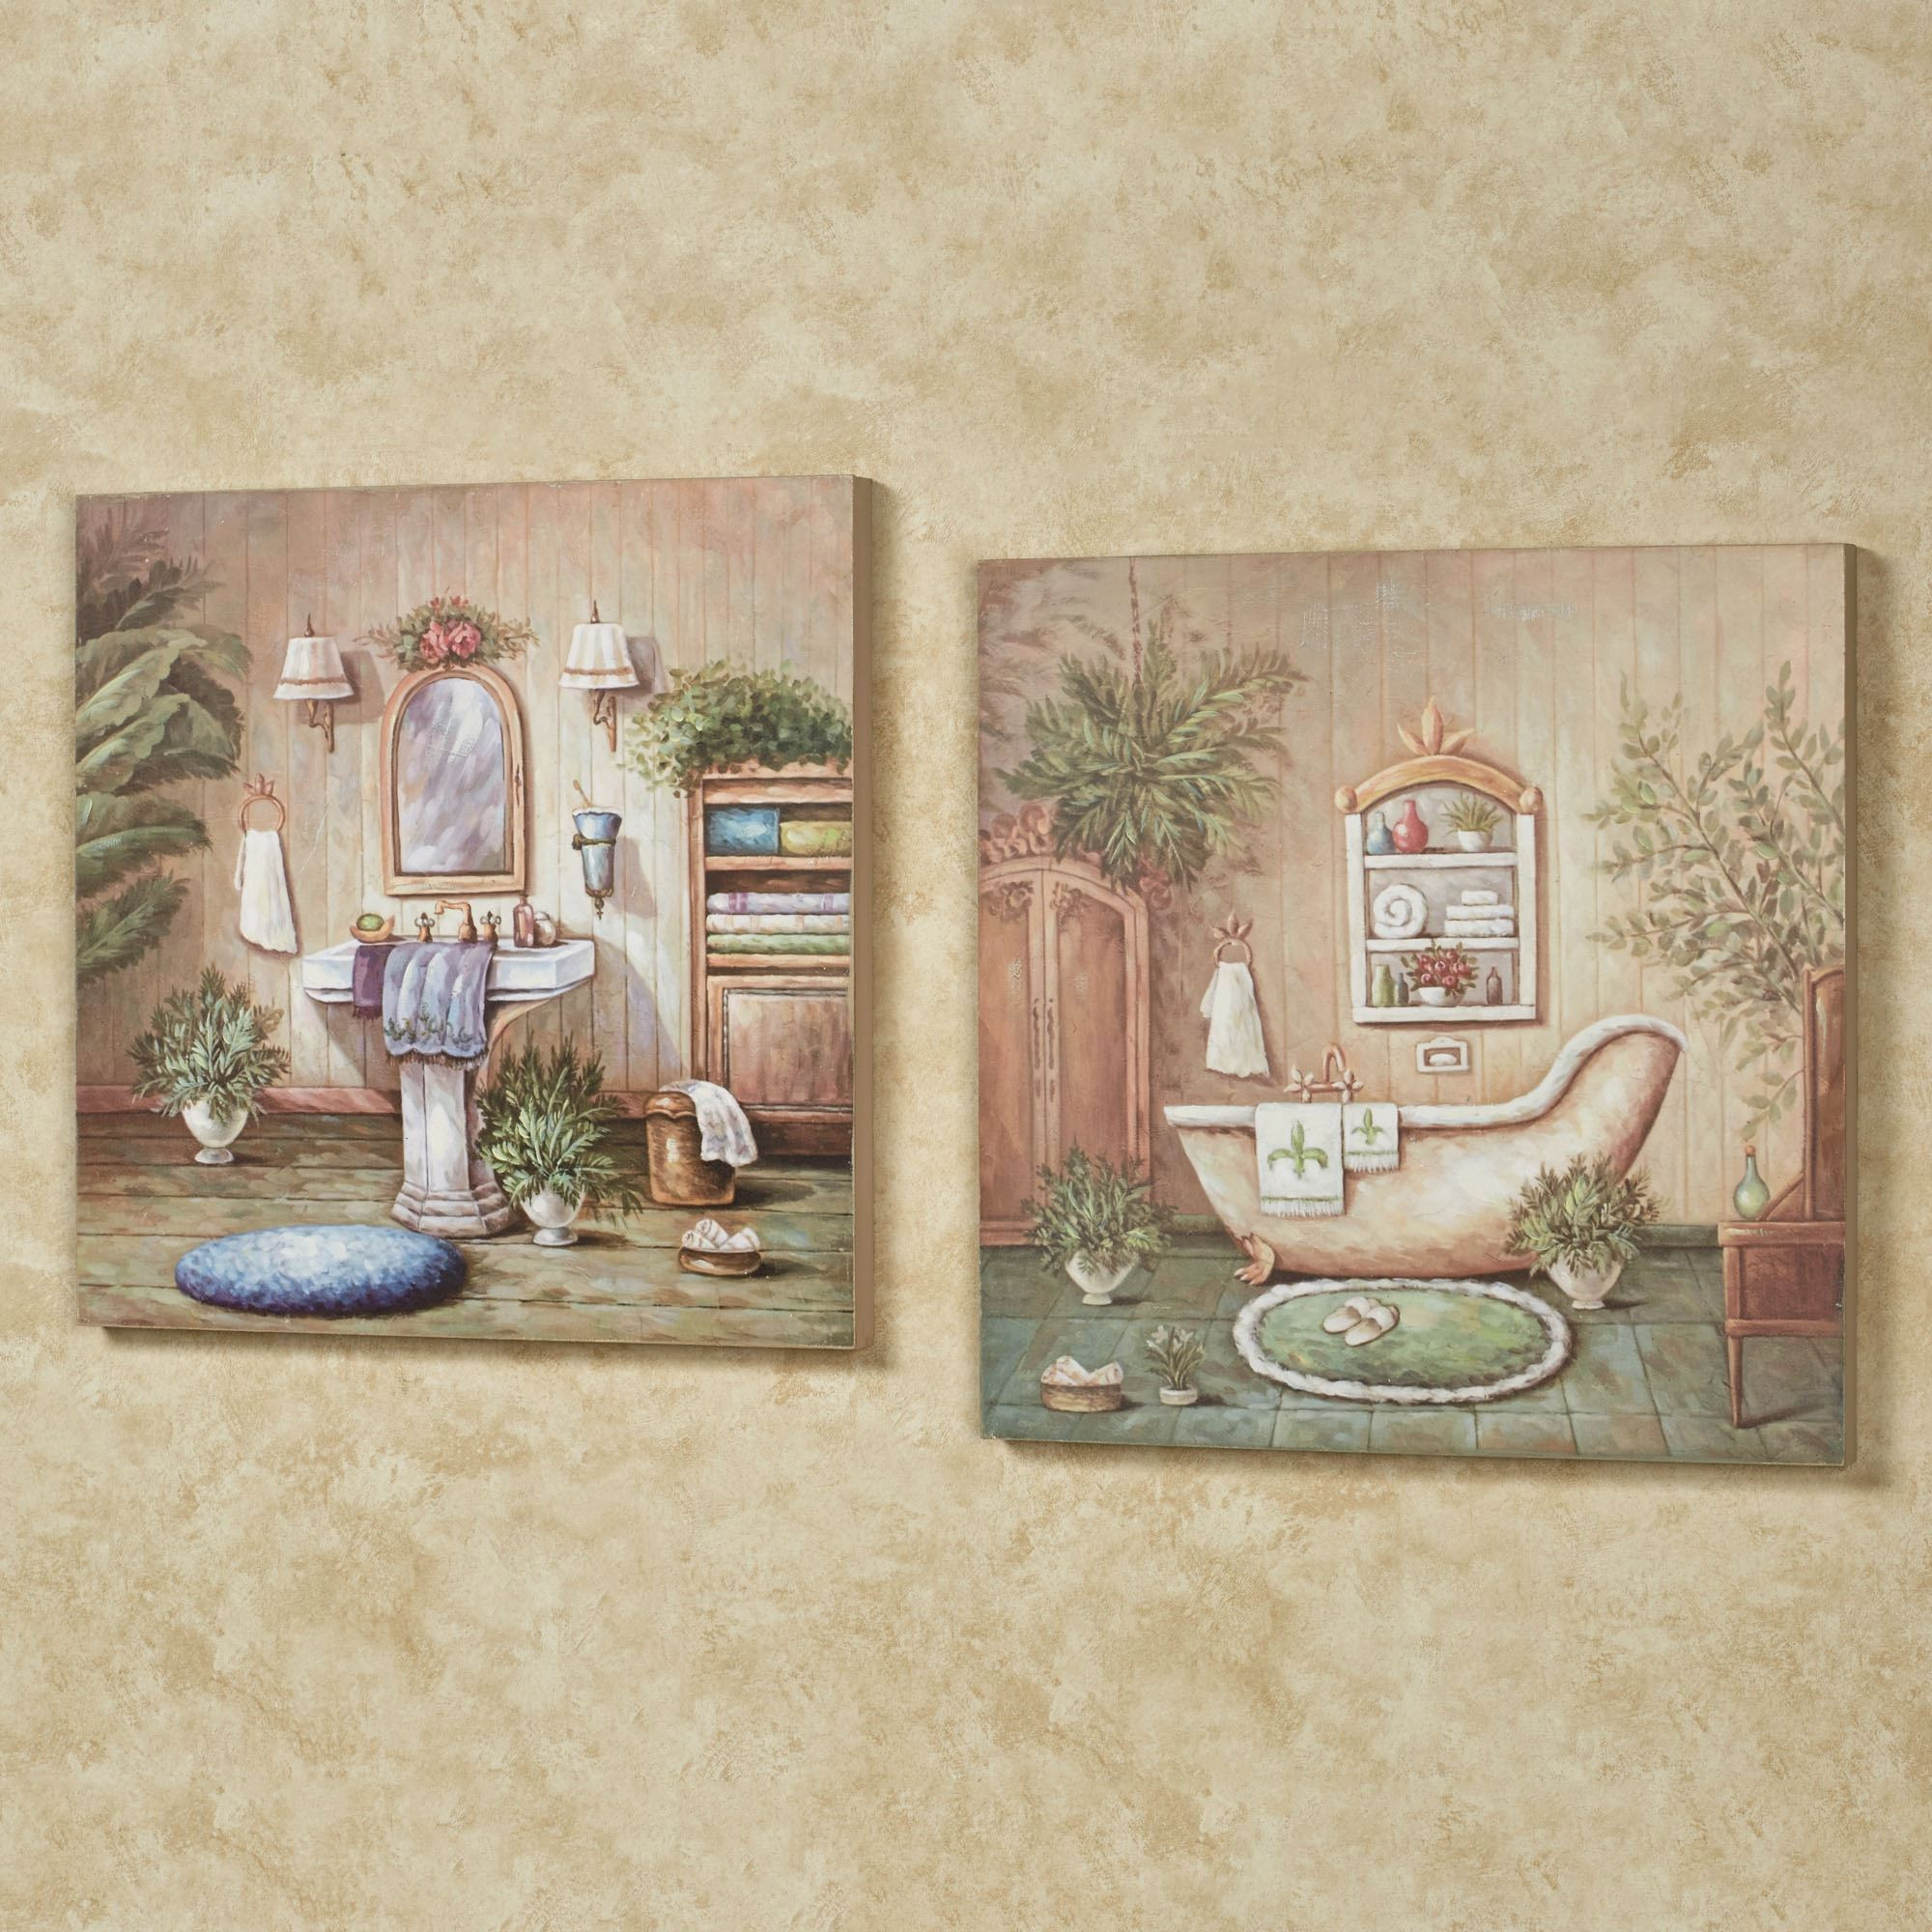 Bathroom Wall Plaques
 Blissful Bath Wooden Wall Art Plaque Set